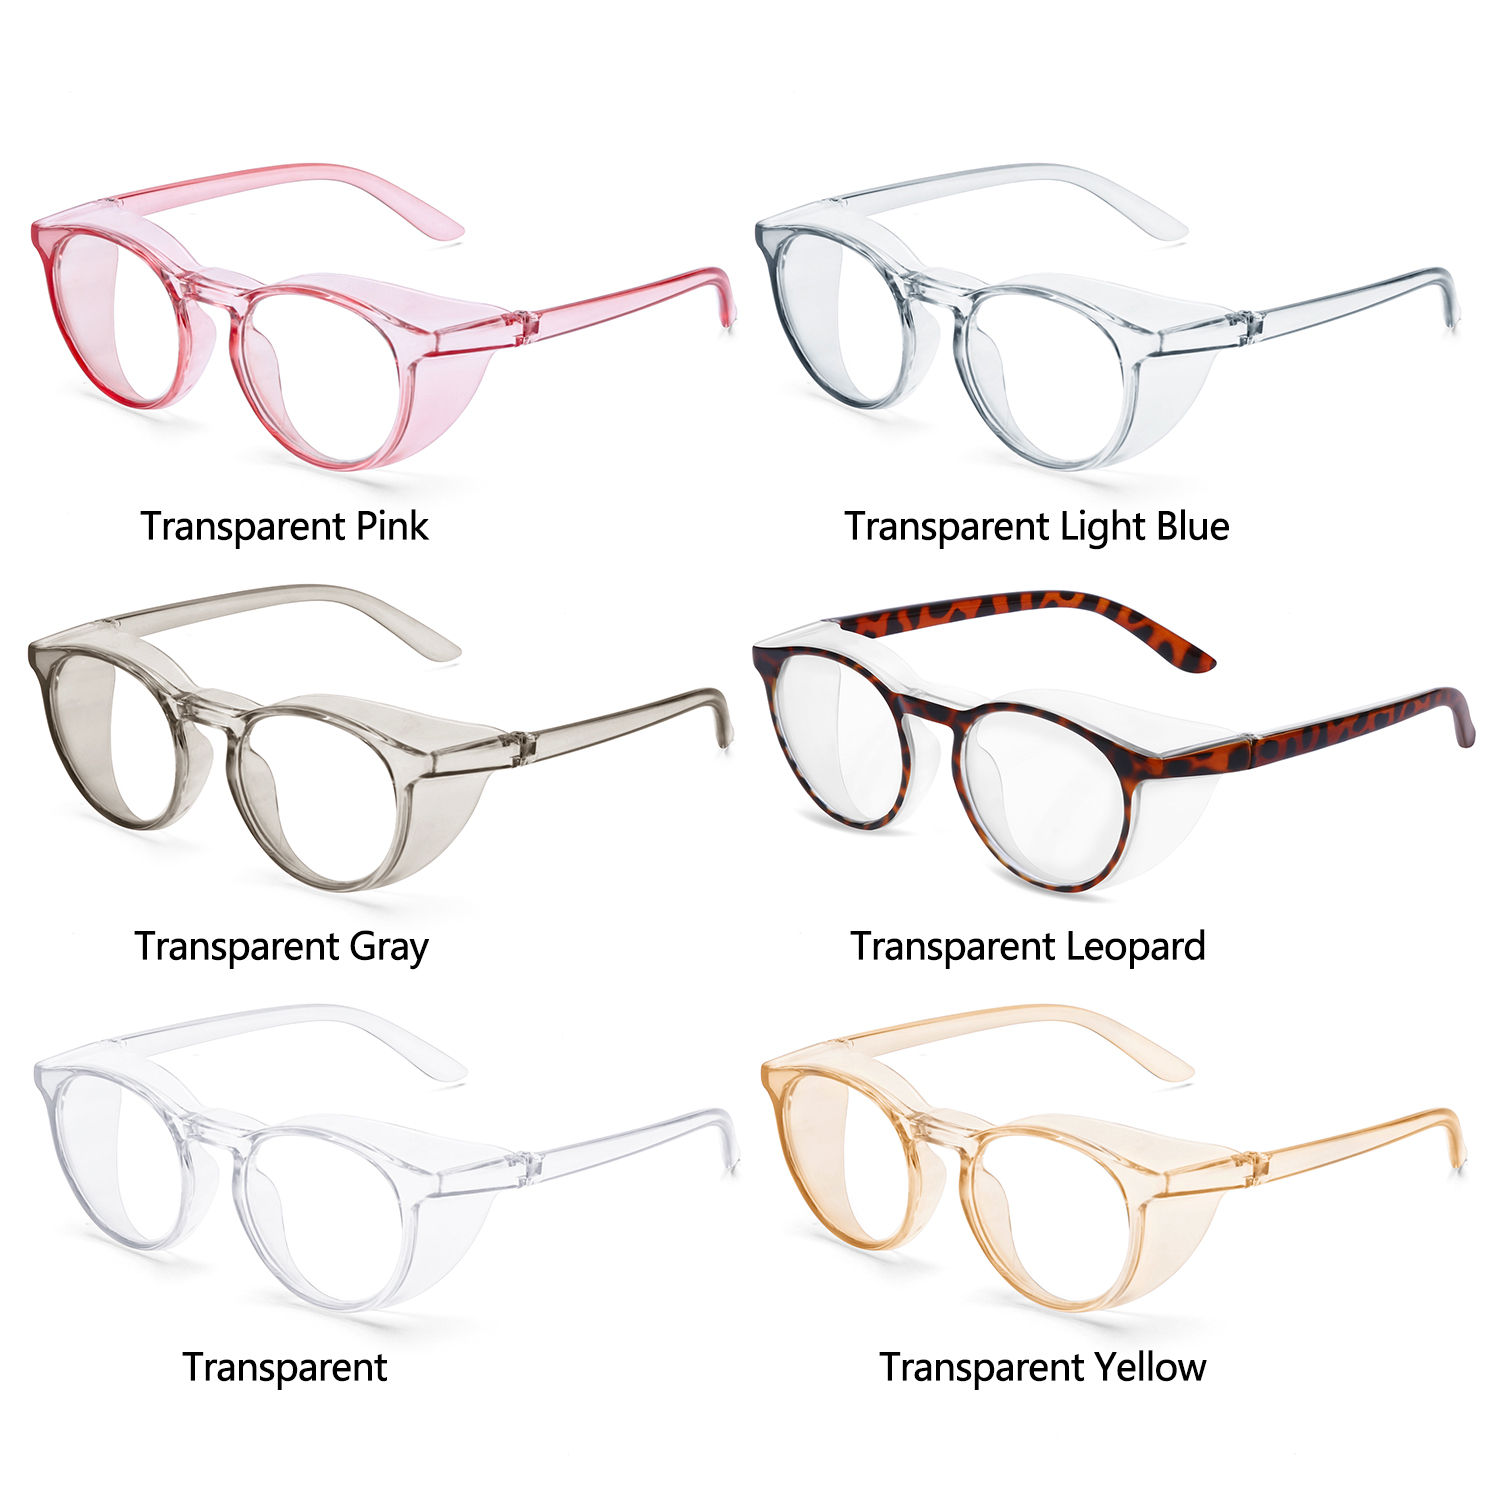 Transparent Goggles Anti Fog Safety Goggles UV400 Protective Glasses,Blue Light Blocking Eyeglasses for Men Women